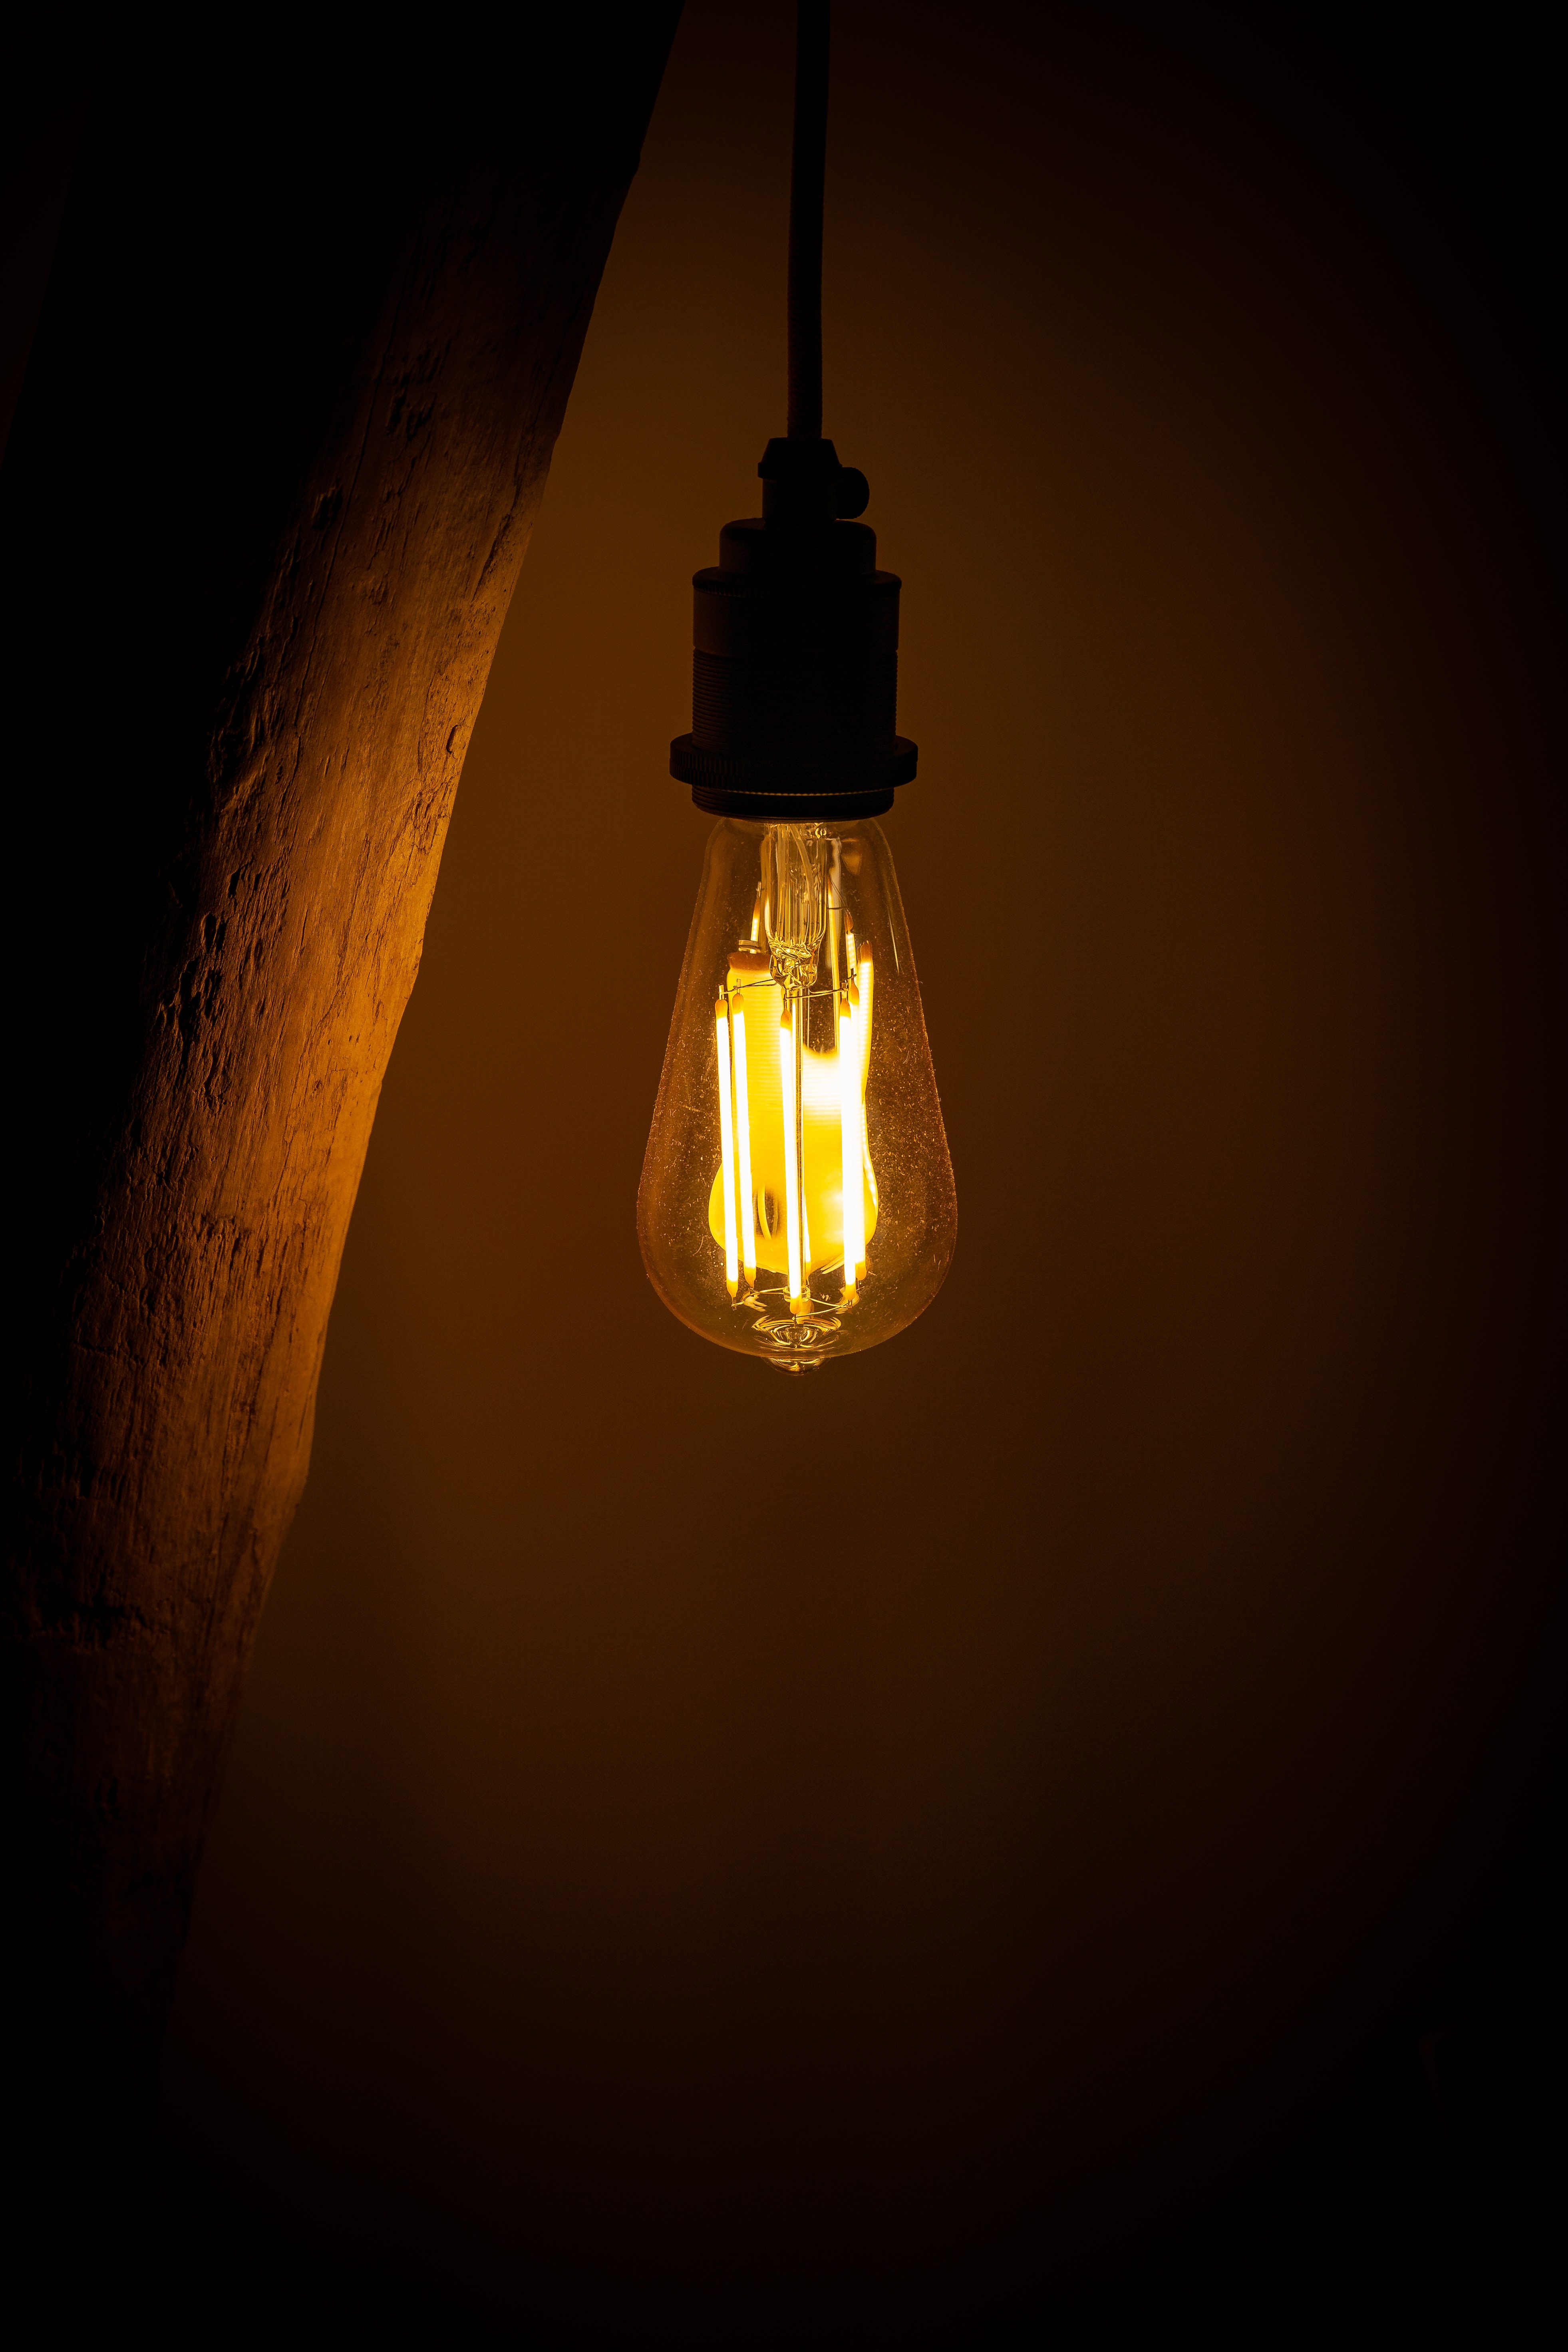 illumination, lamp, dark, lighting, electricity, light bulb